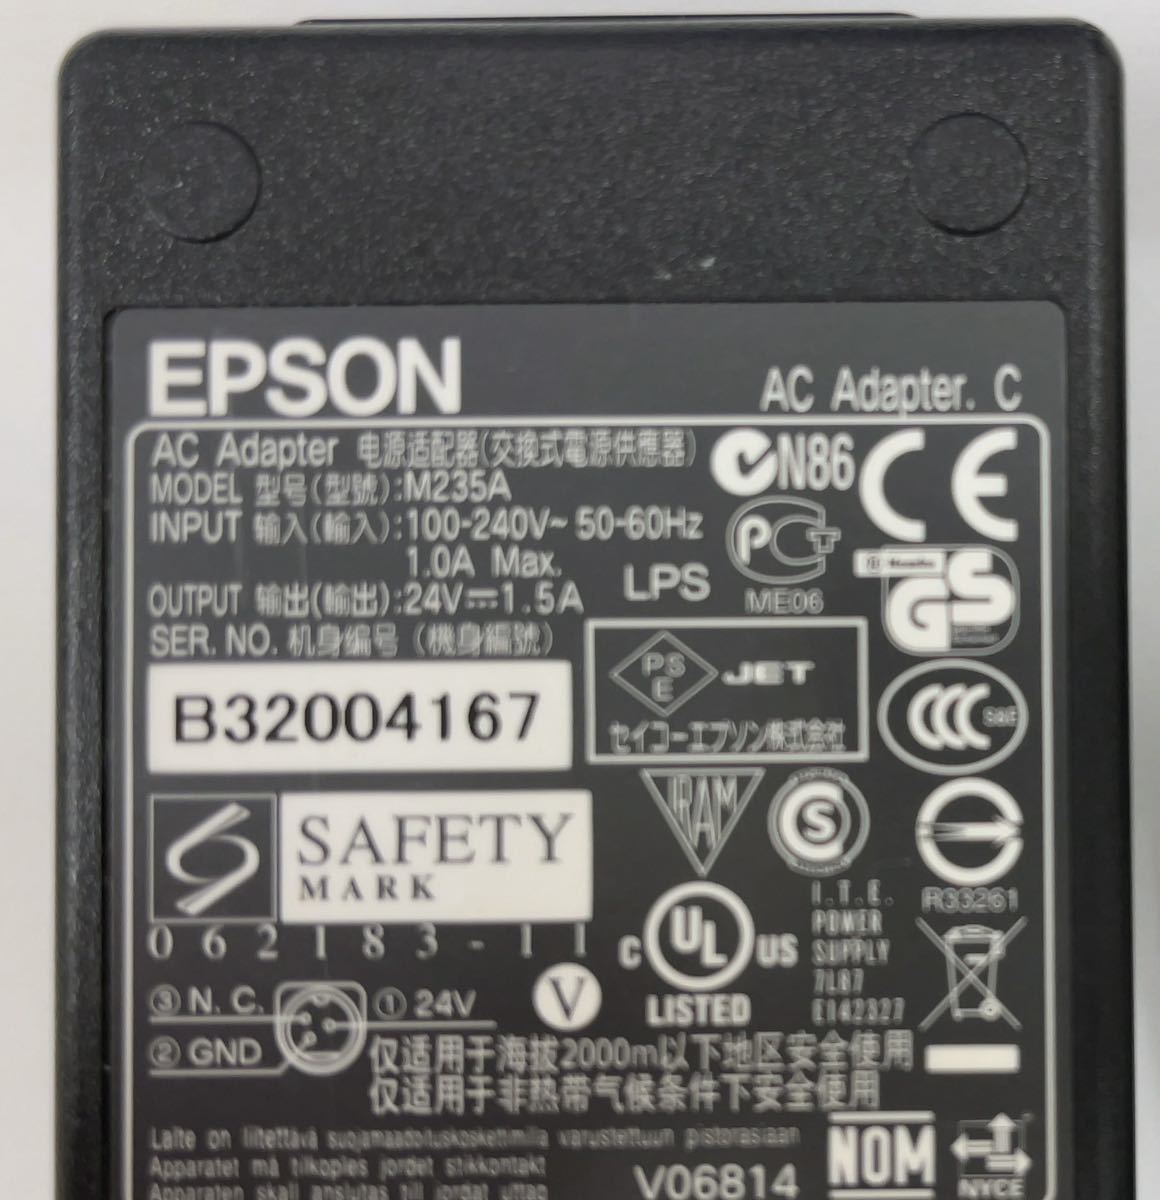  Epson EPSON принтер для AC адаптор M235A б/у 